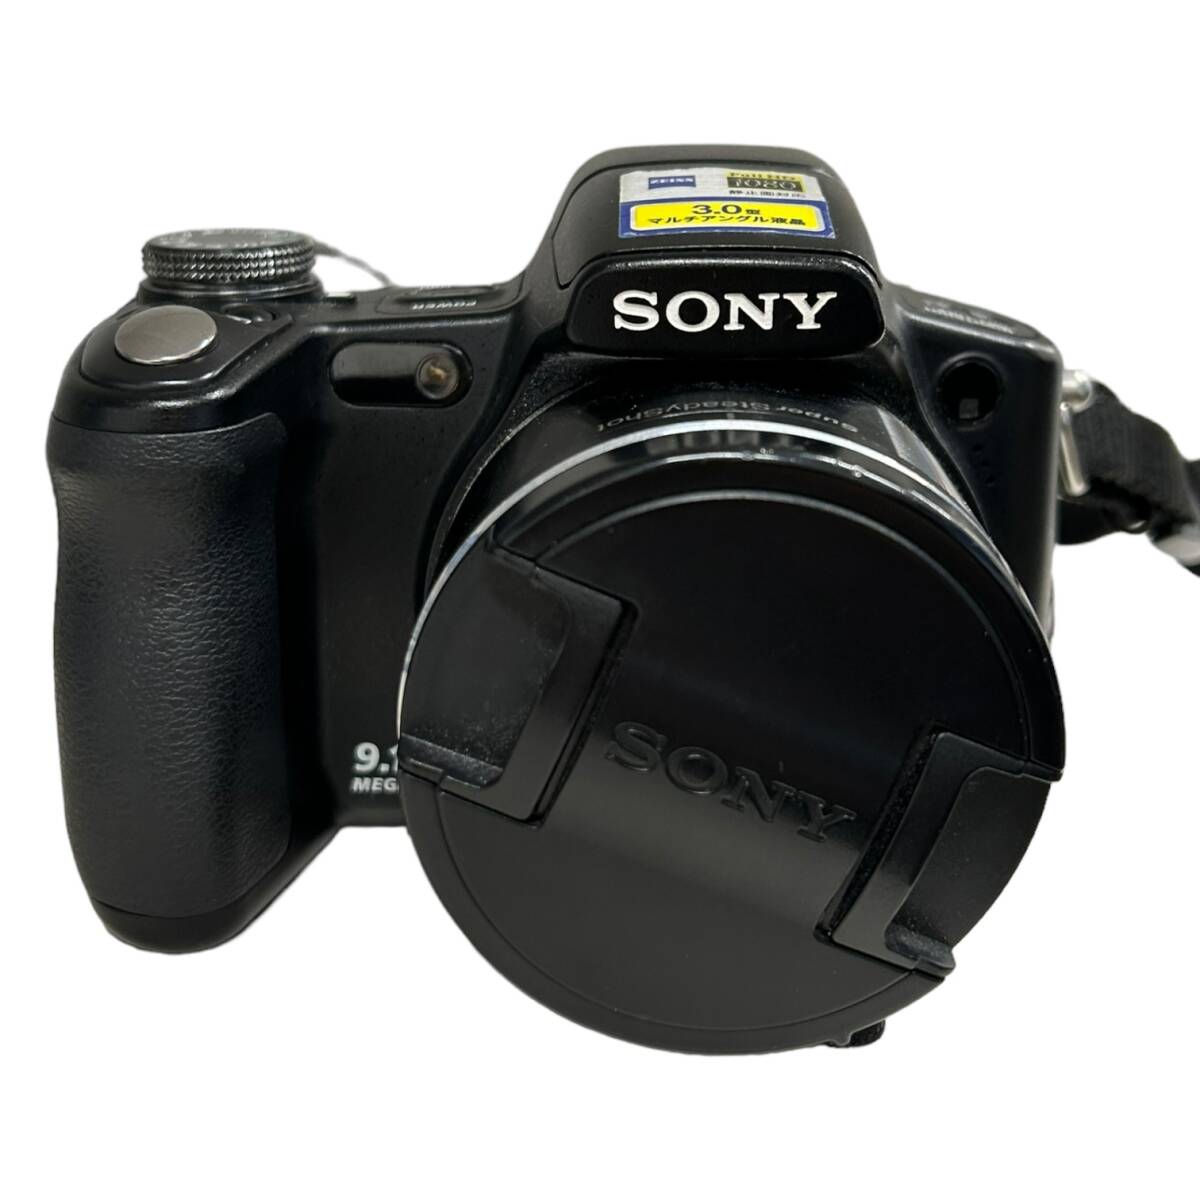 SONY ソニー 15x OPTICAL ZOOM 9.1 MEGA PIXELS デジタルカメラ 一眼レフ コンパクトカメラ バリアングル 【中古】の画像1